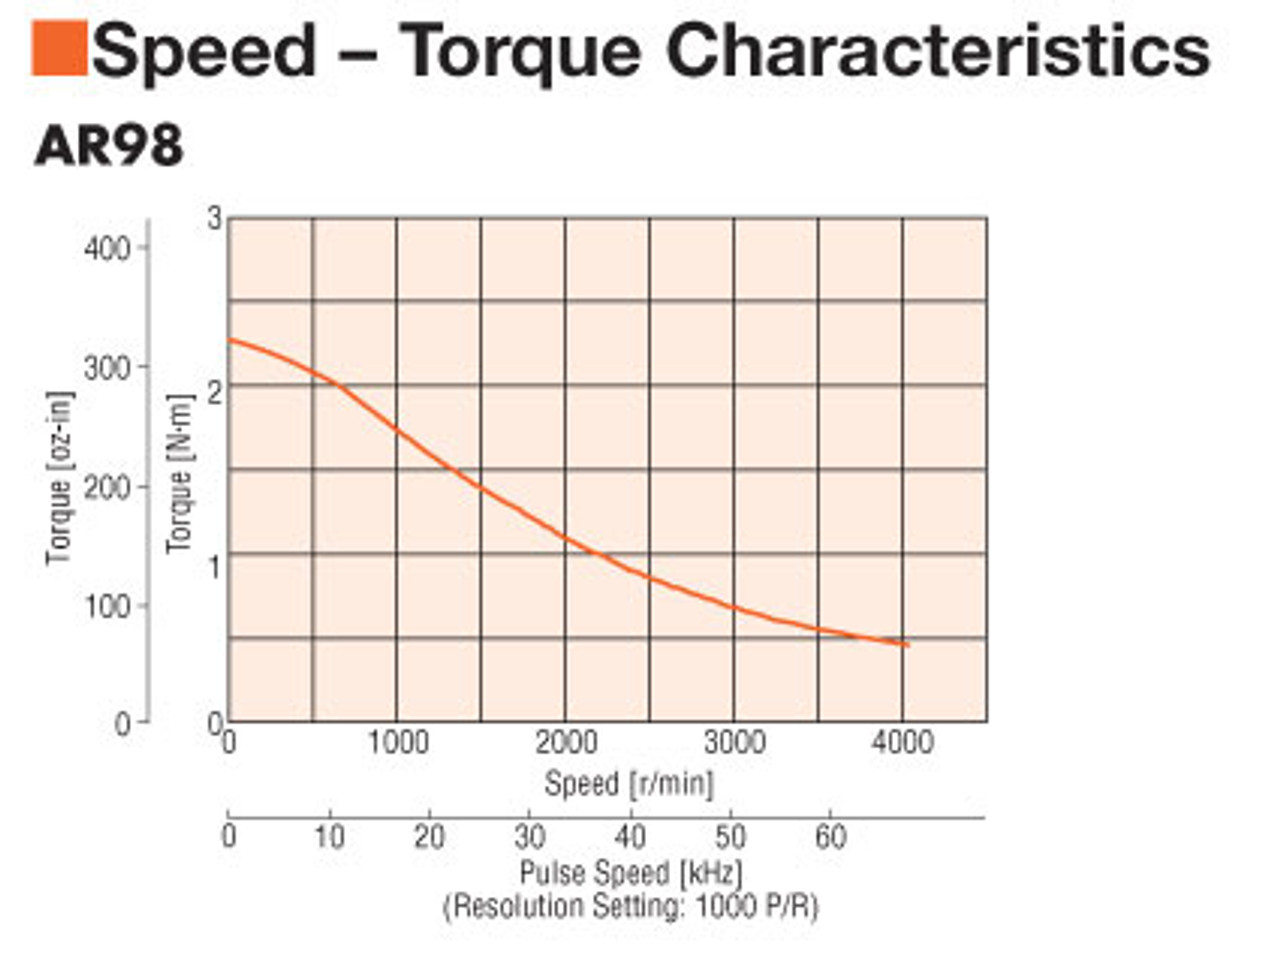 ARM98BC - Speed-Torque